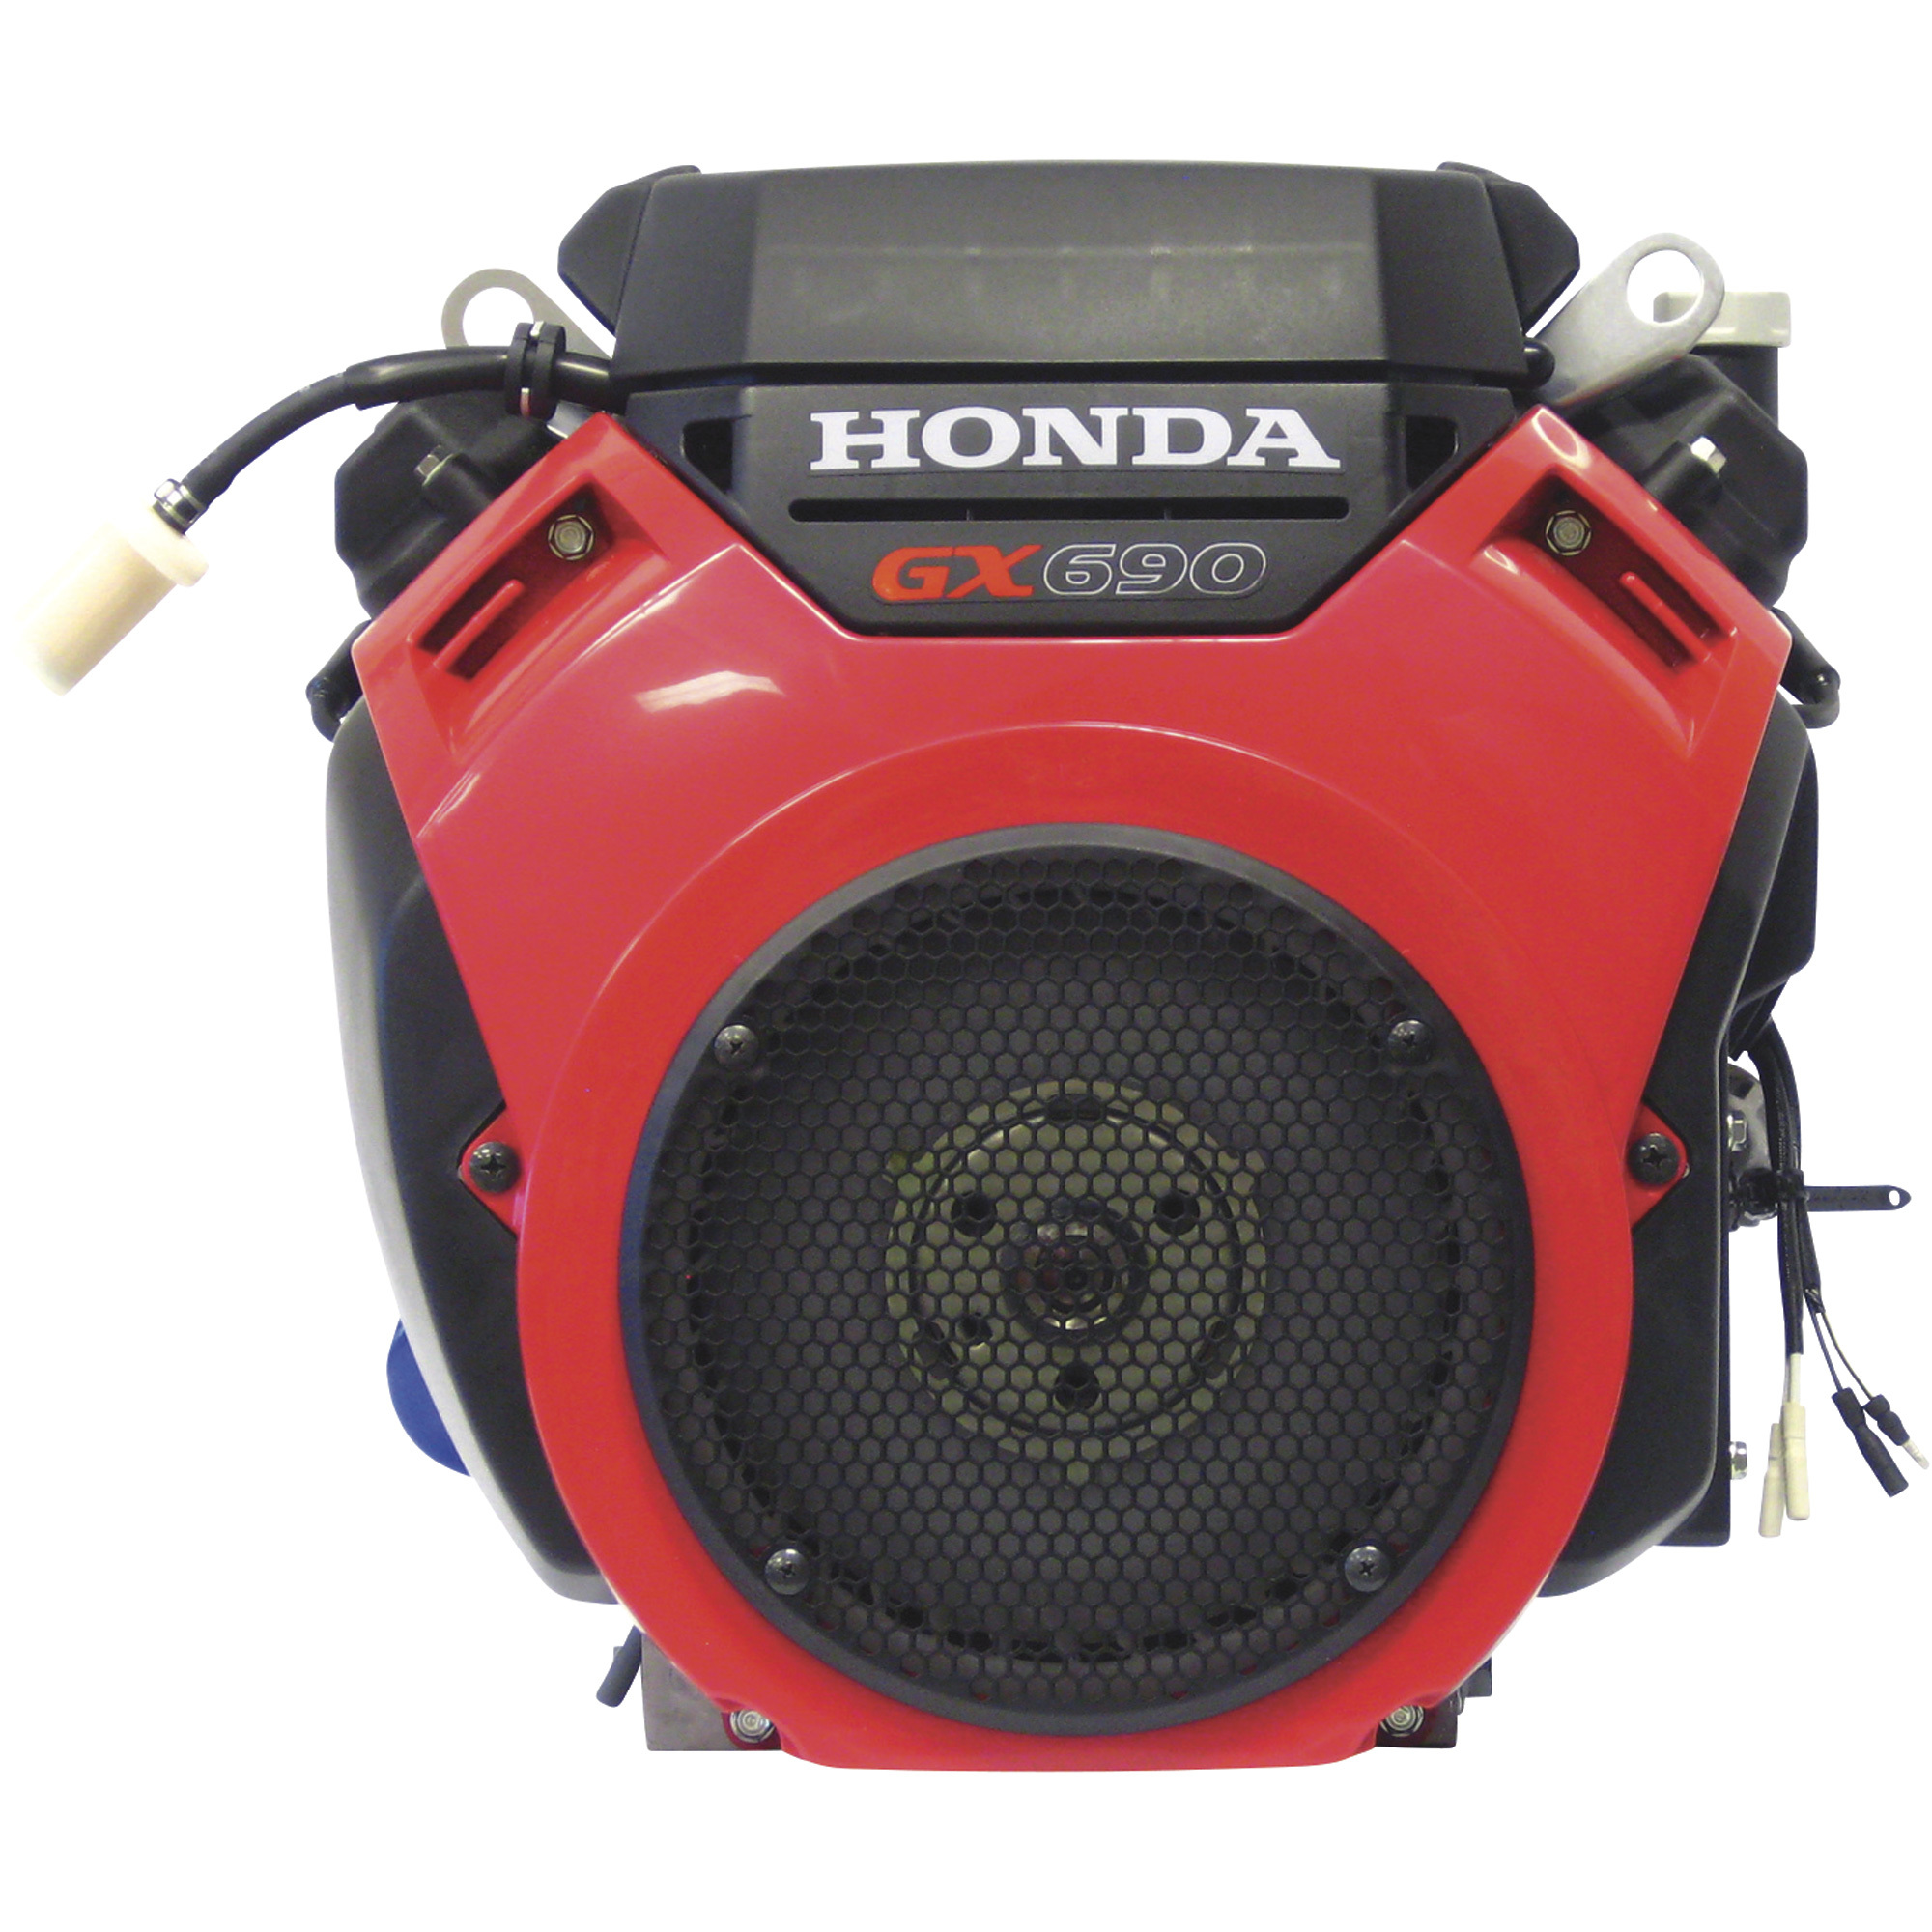 Honda 688cc, GX Series V-Twin OHV Engine with Electric Start â Model GX690RHTDW